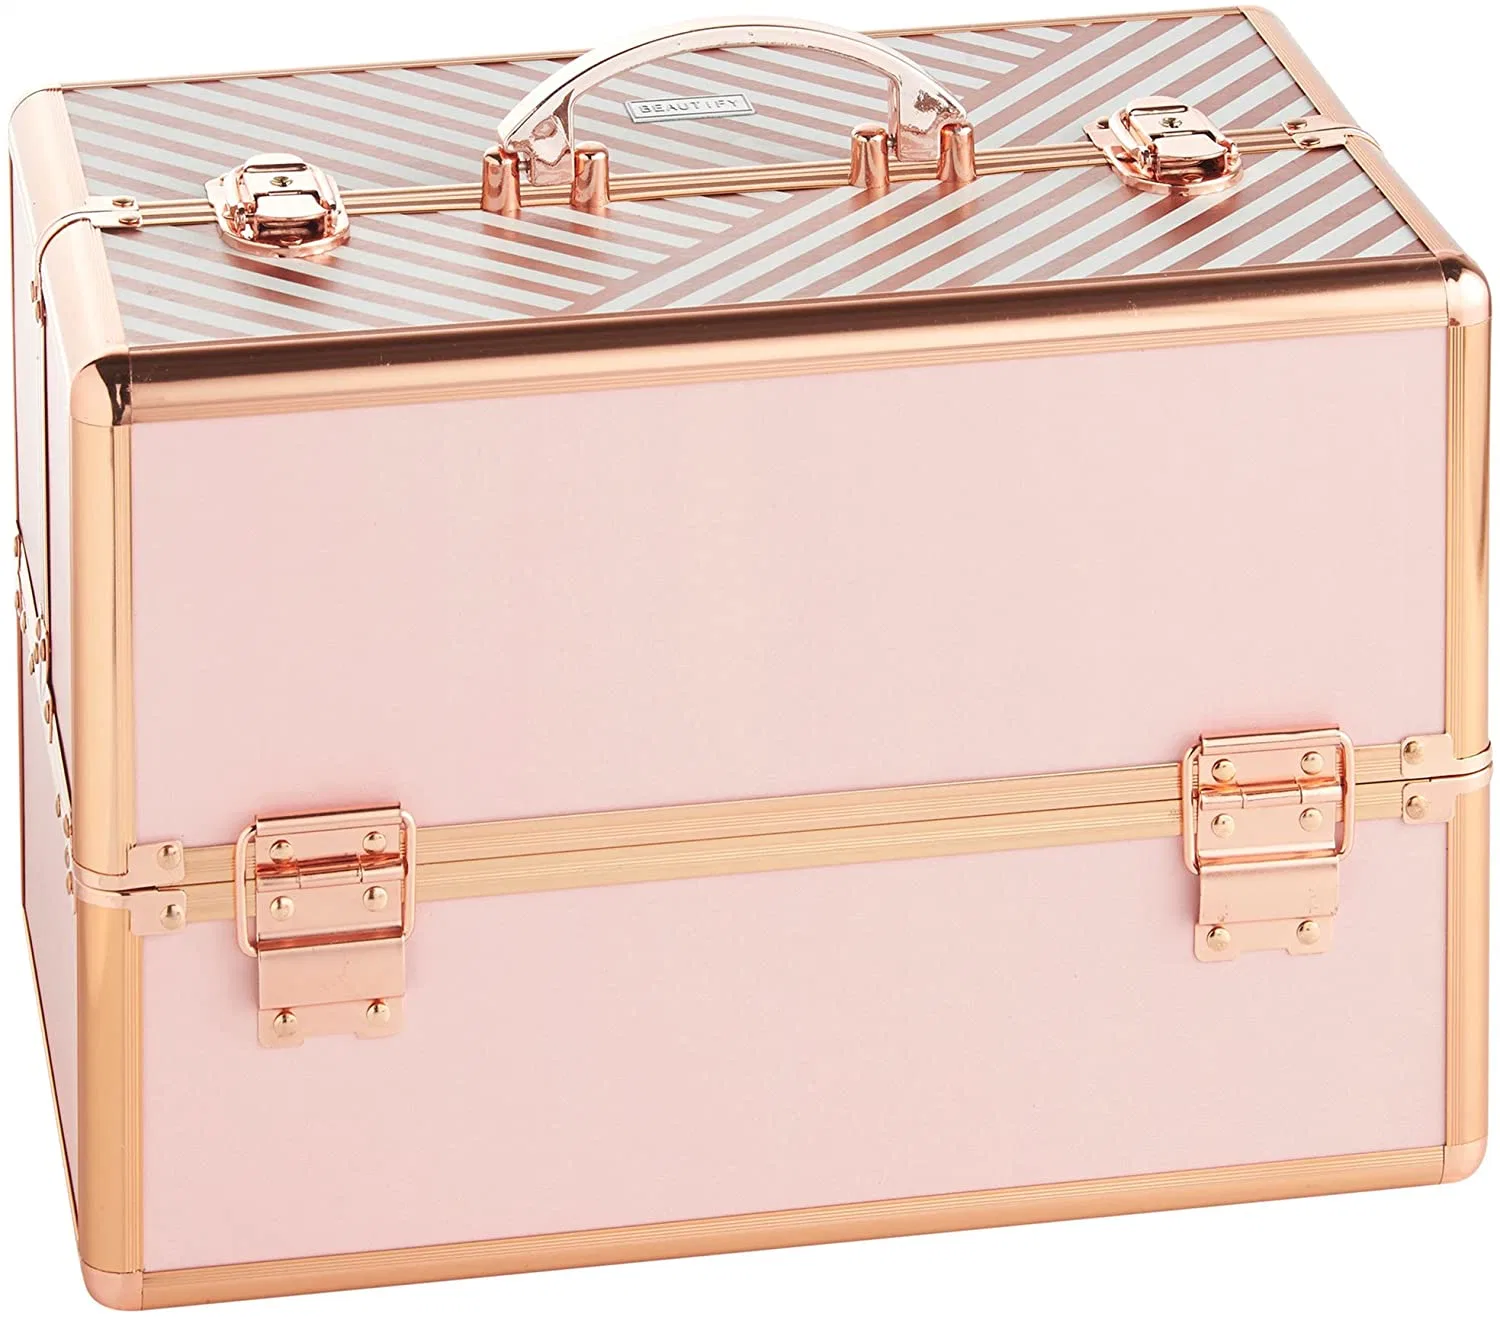 Professional Aluminum Make up Train Case Beauty Box Vanity Large Cosmetic Case